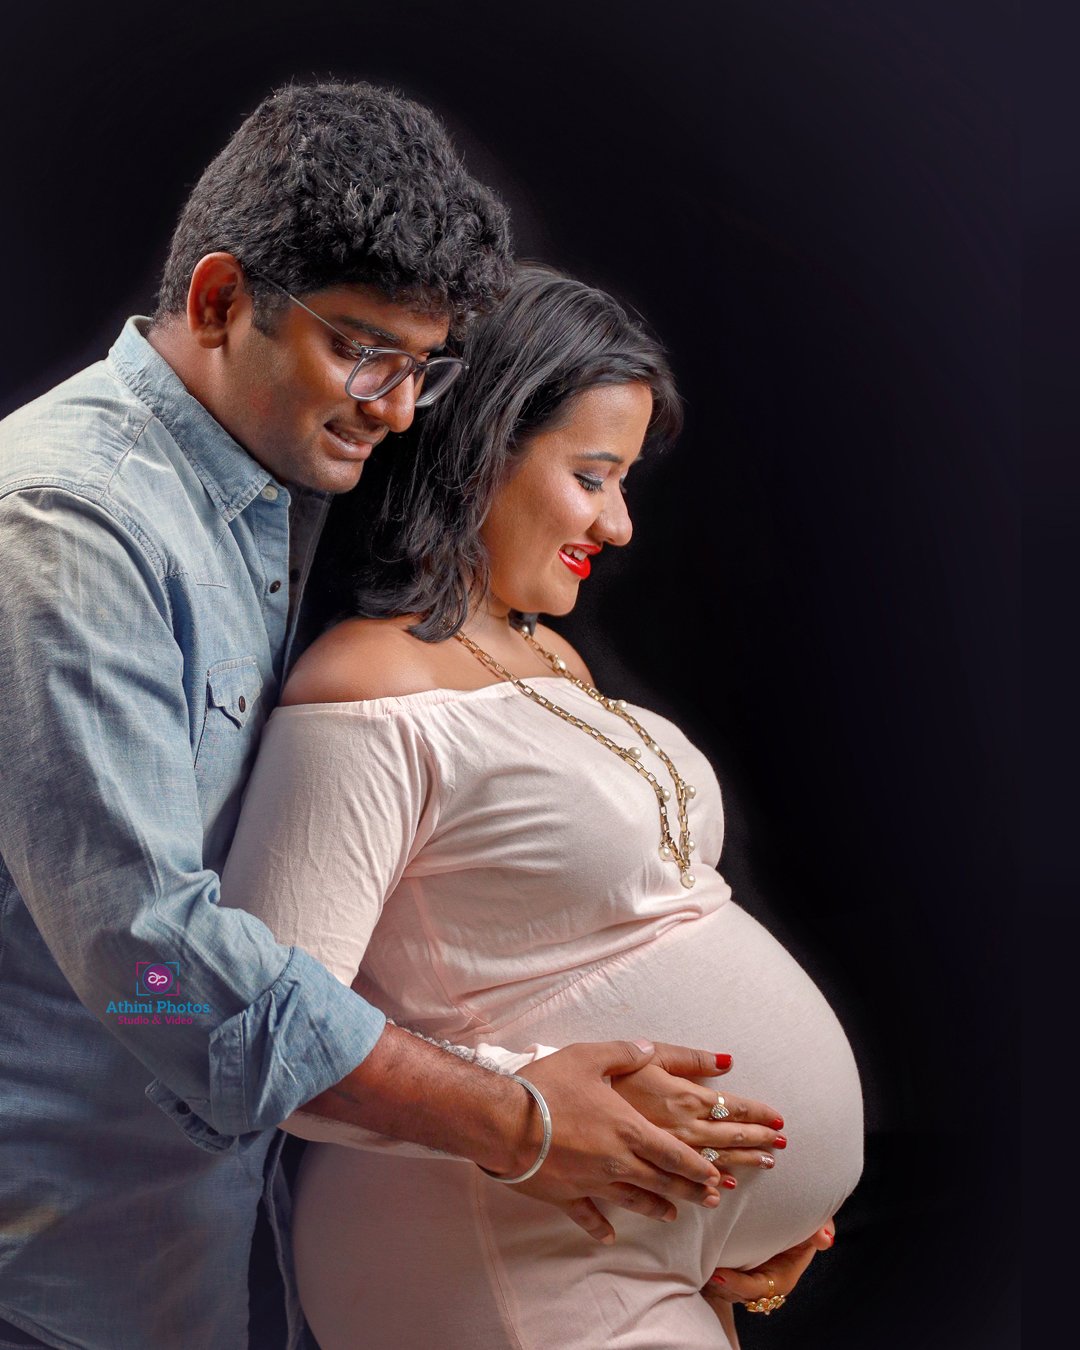 Meternity Photoshoot ideas for Couple/ Maternity Photography Ideas/  Pregnency Photo Poses for Couple - YouTube